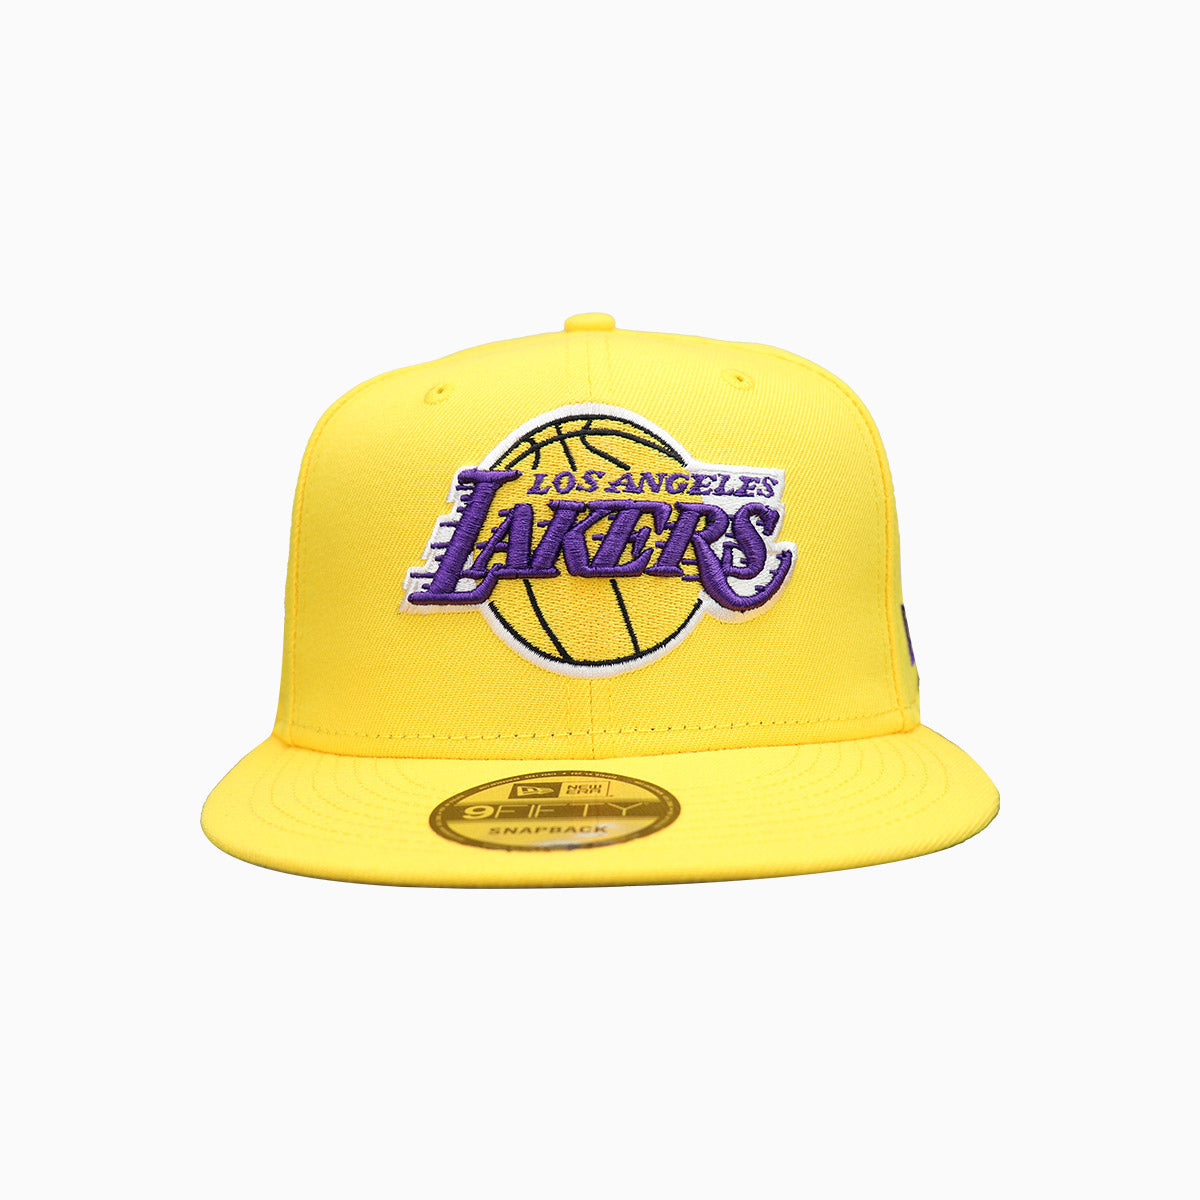 New Era 9FIFTY Los Angeles Lakers Snapback Hat Dark Royal